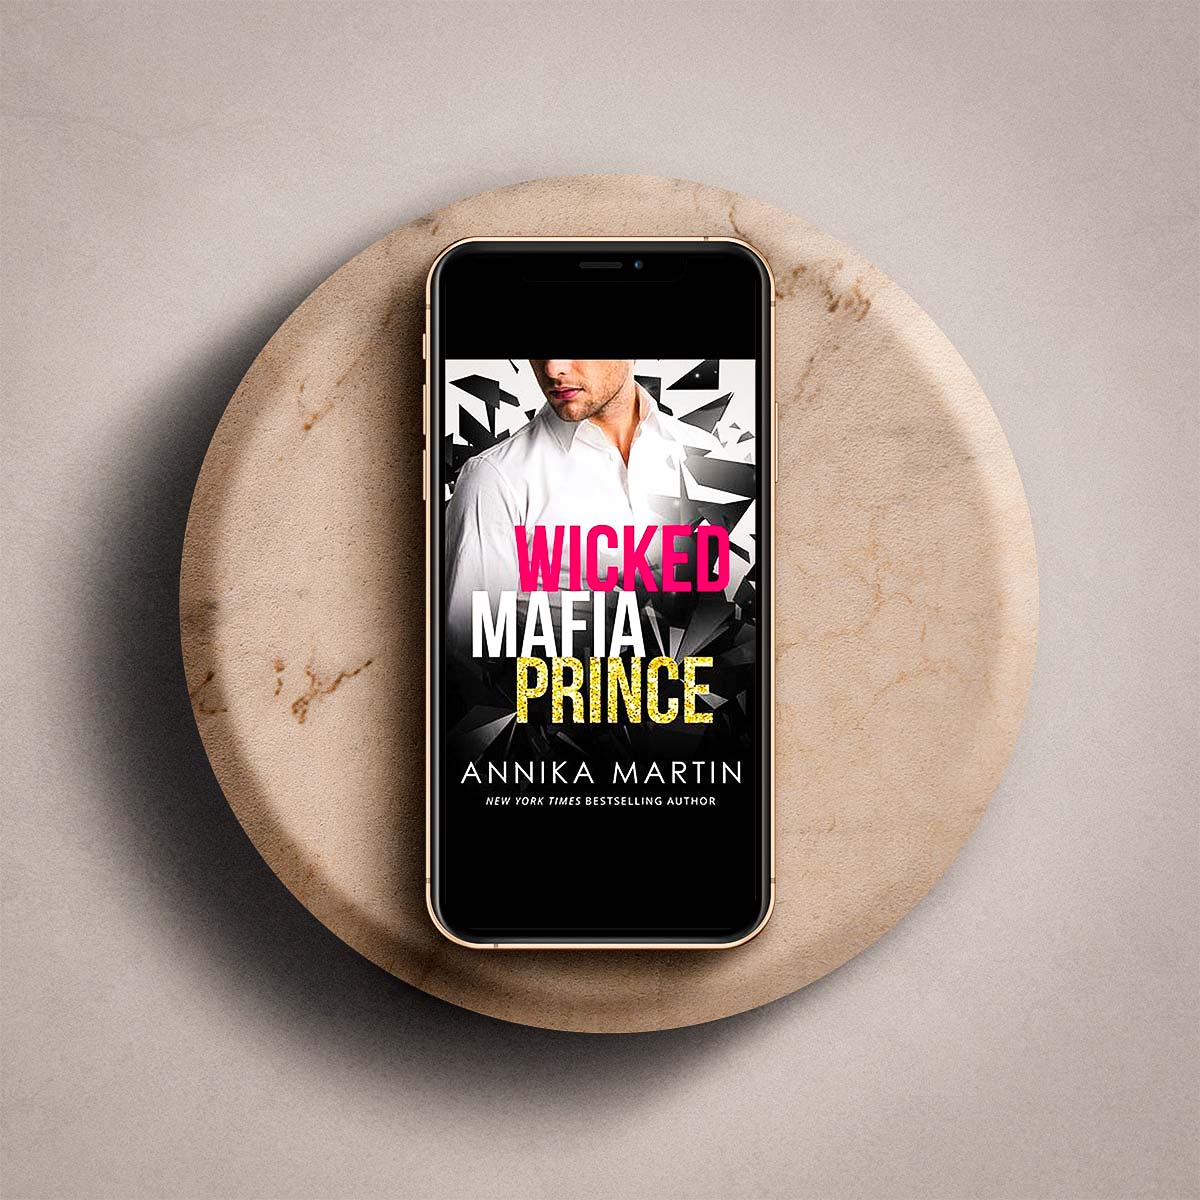 Wicked Mafia Prince by Annika Martin – Dangerous Royals Book 2